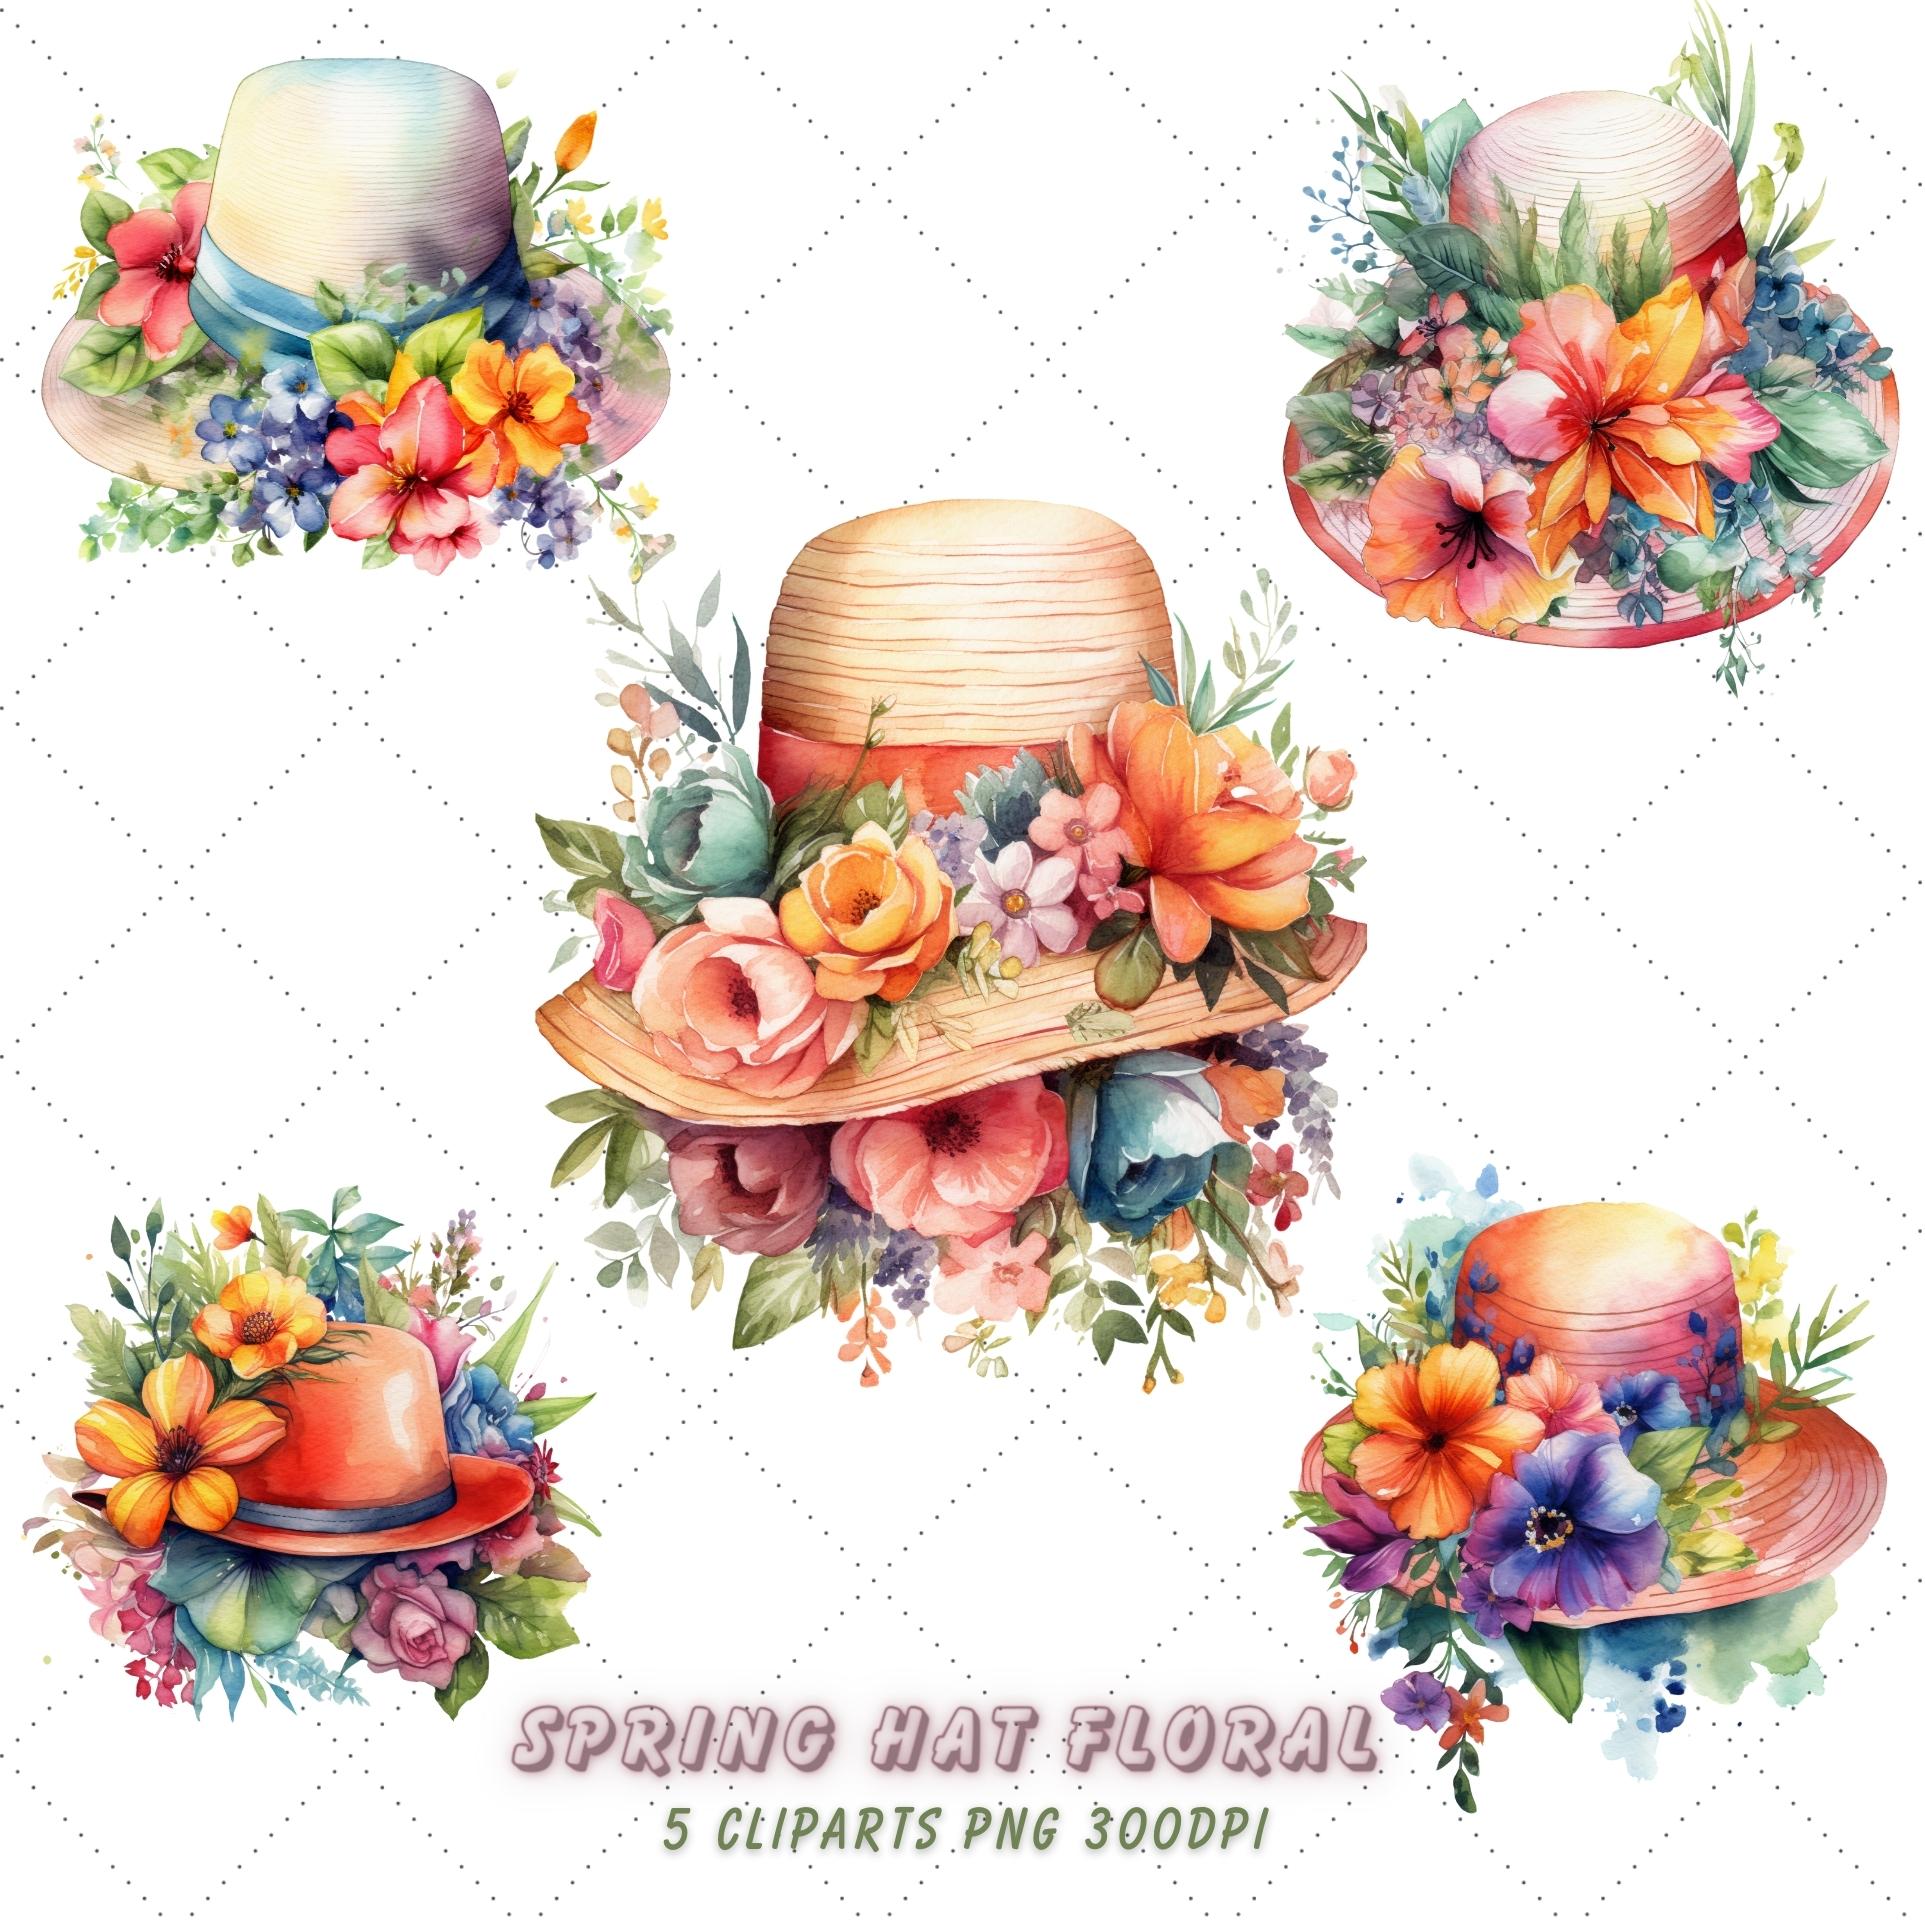 Watercolor Spring hat Floral Clipart Bundle cover image.